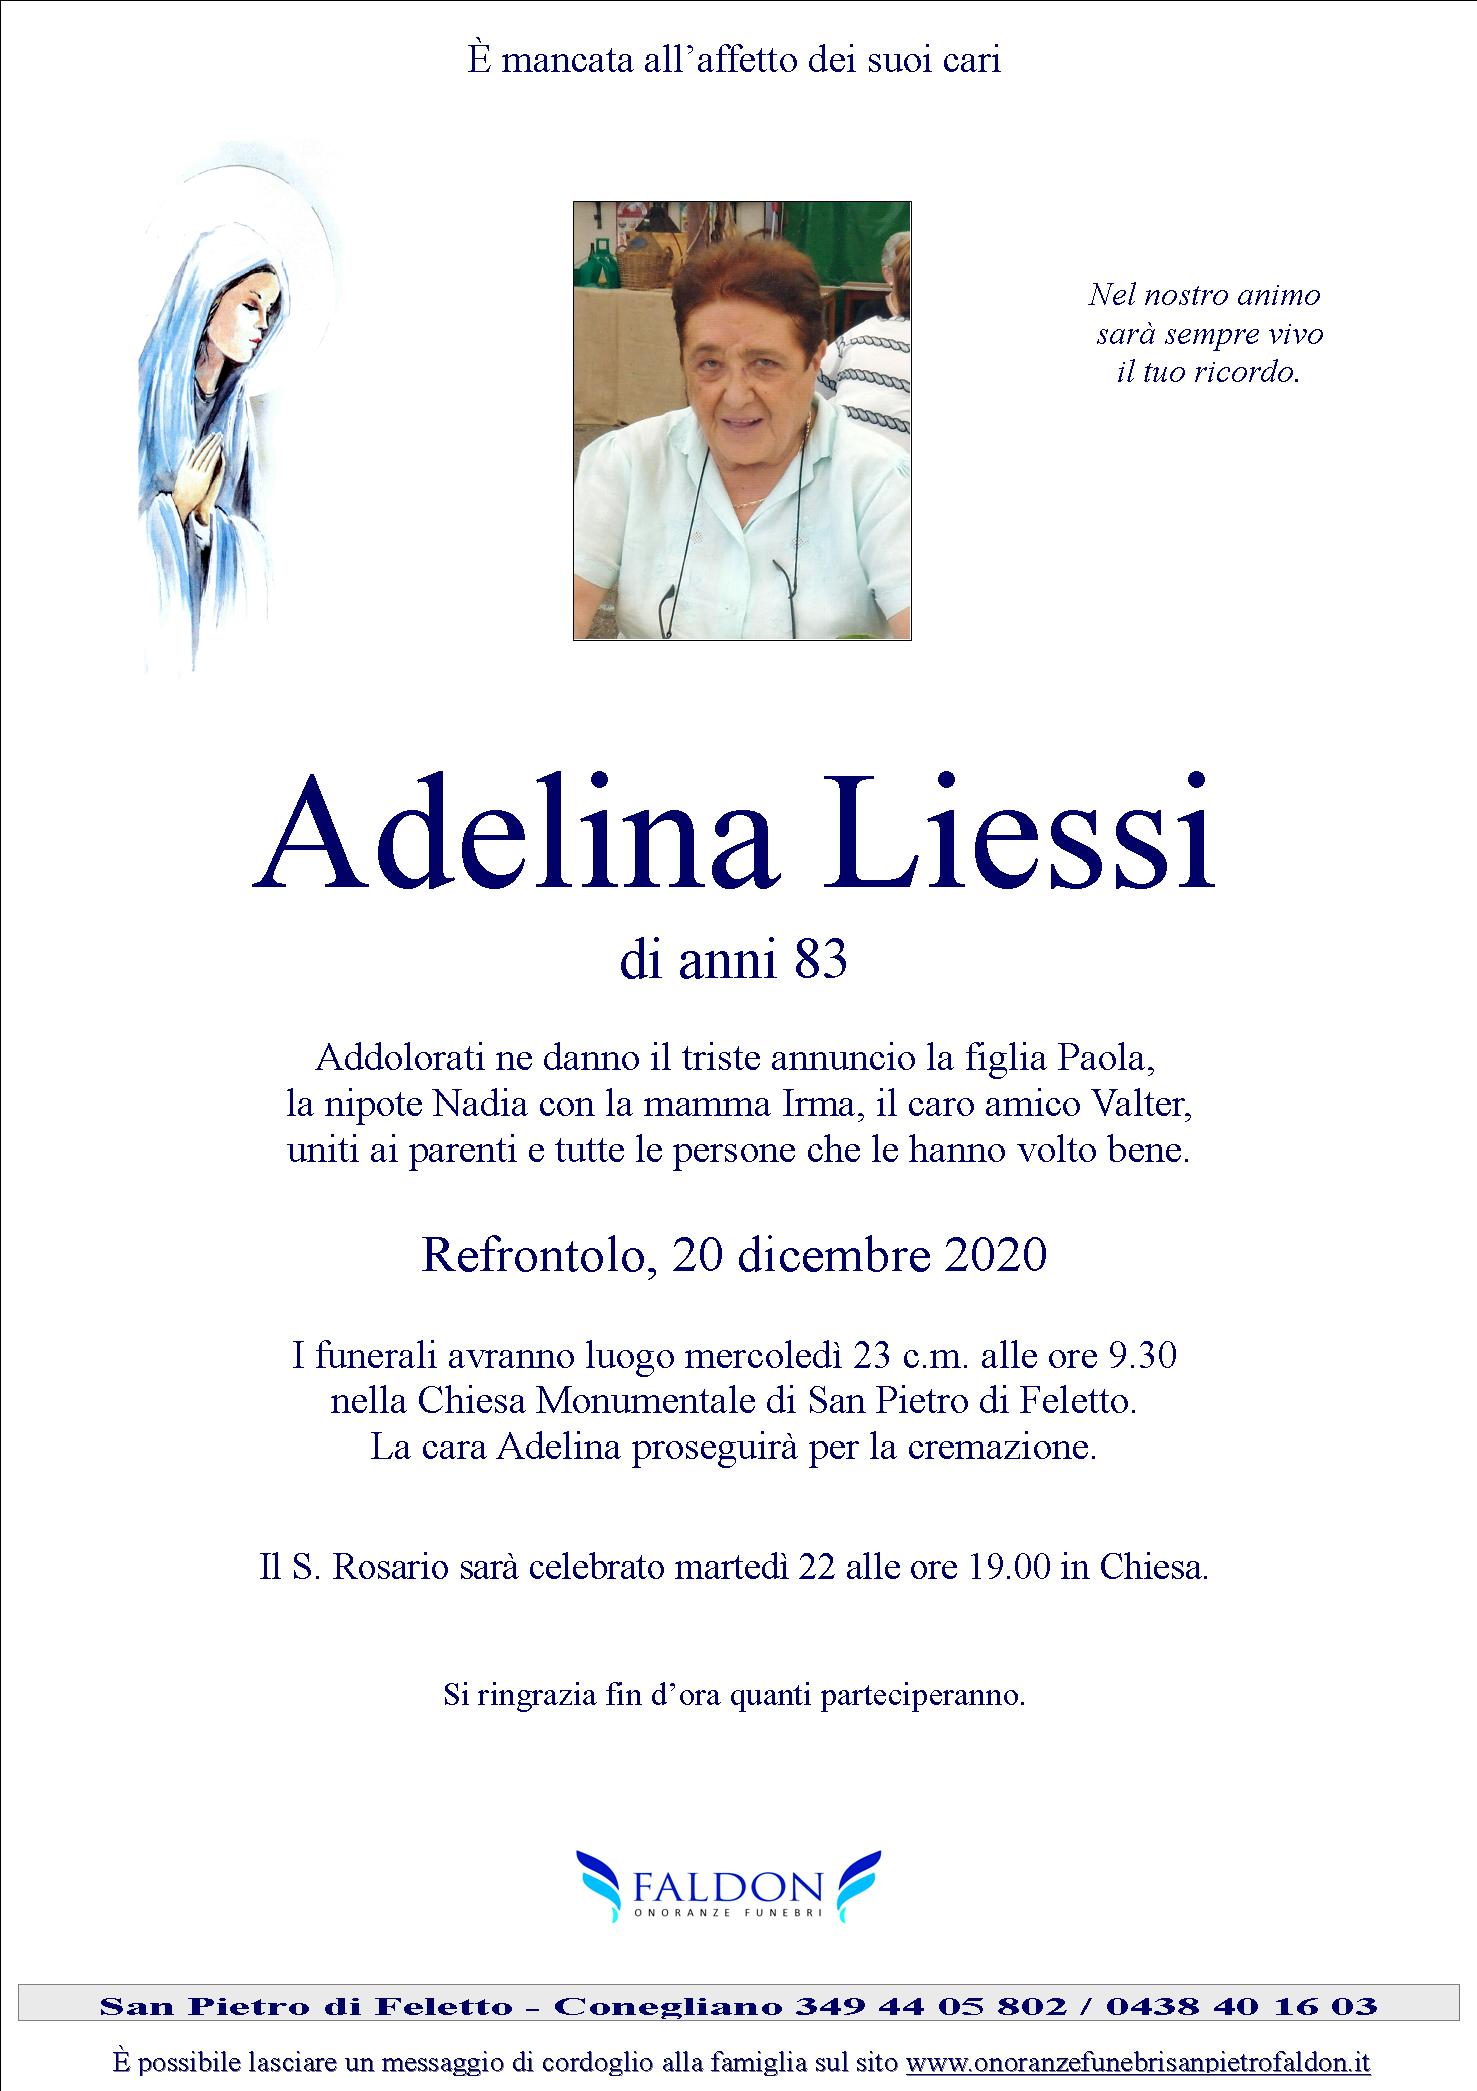 Adelina Liessi